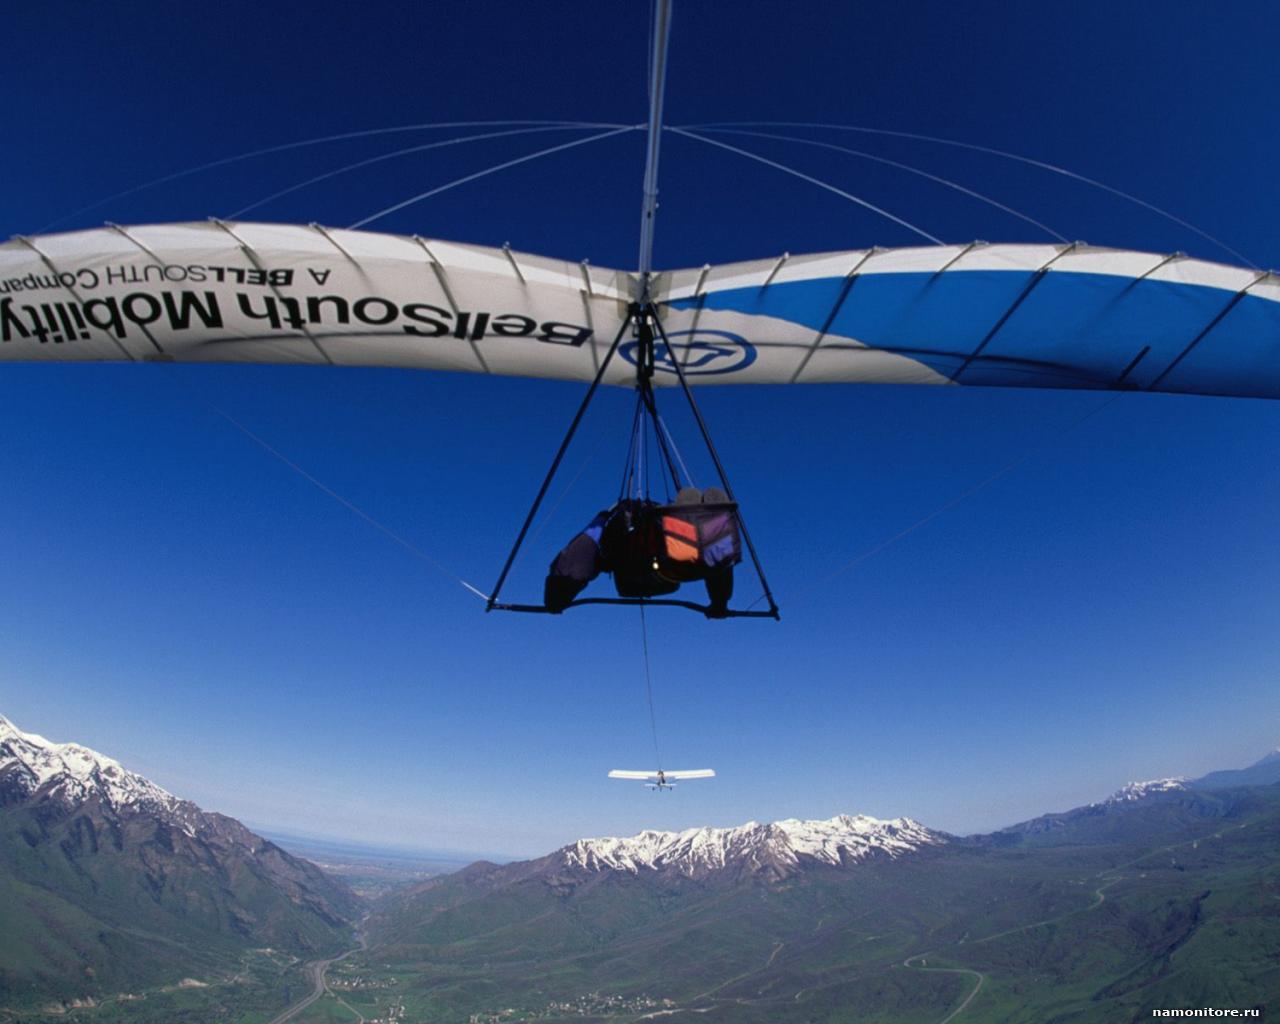 Hang Gliding Wallpaper Pixshark Image